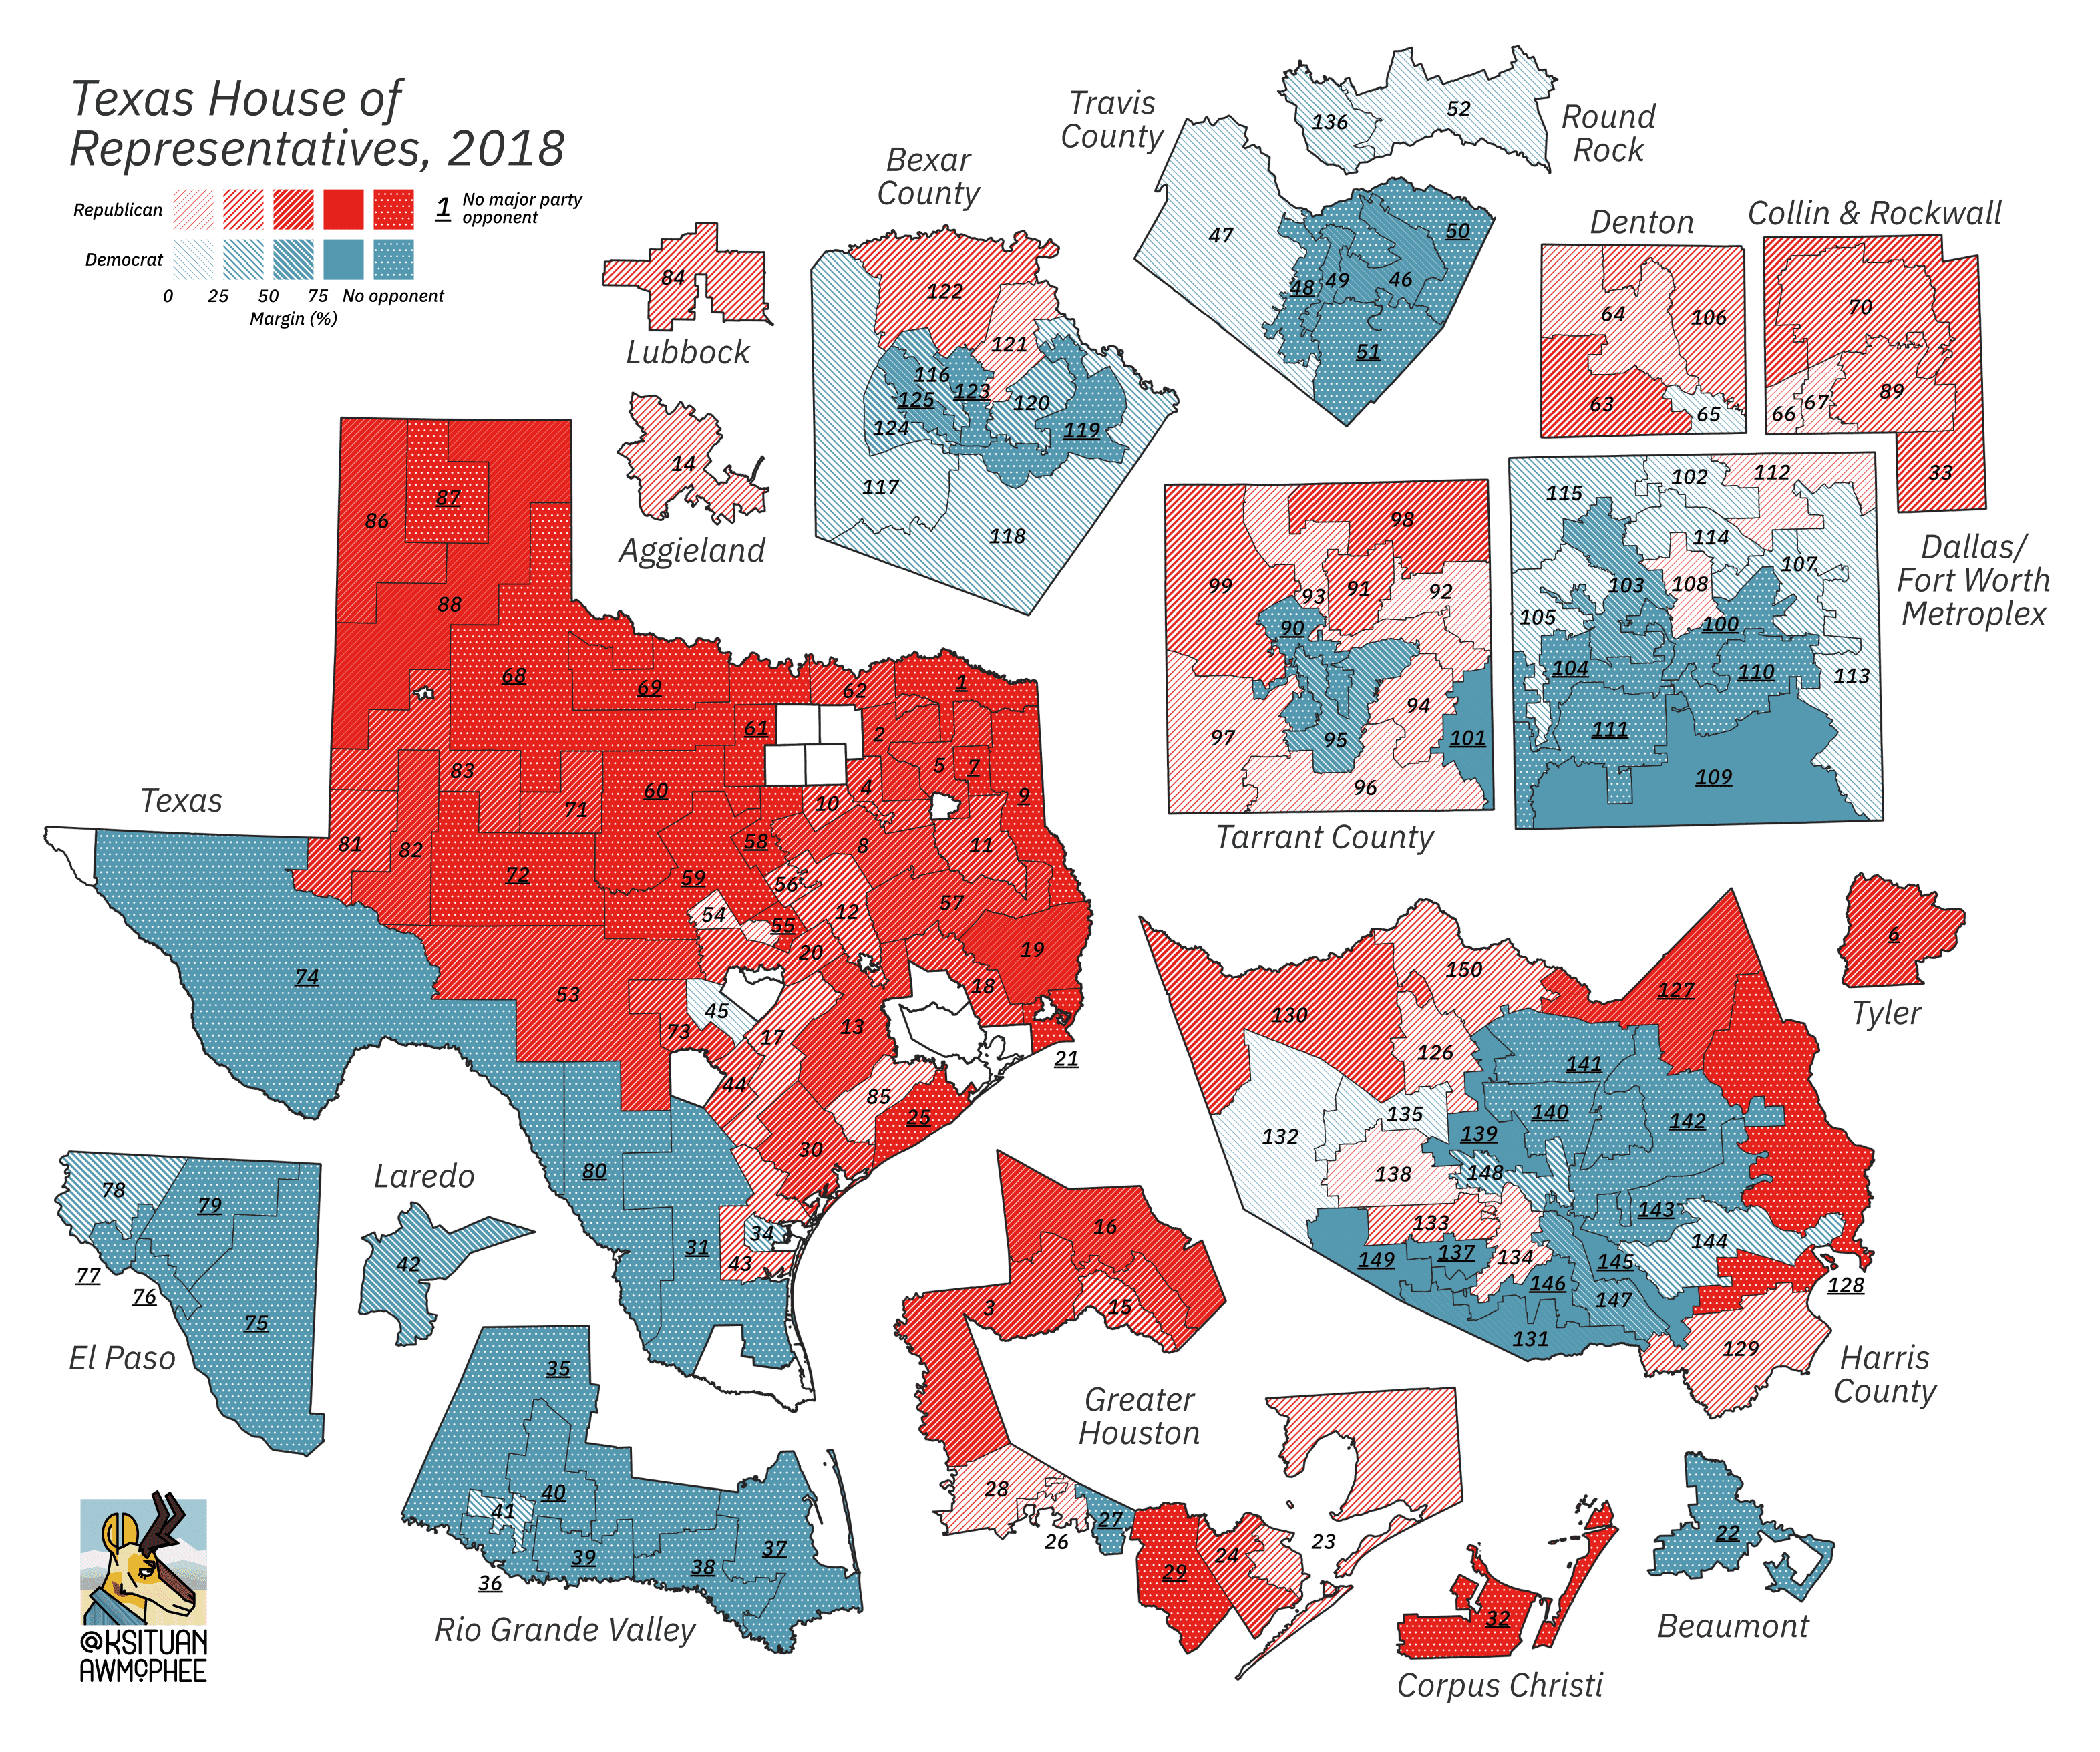 A political map of Texas.